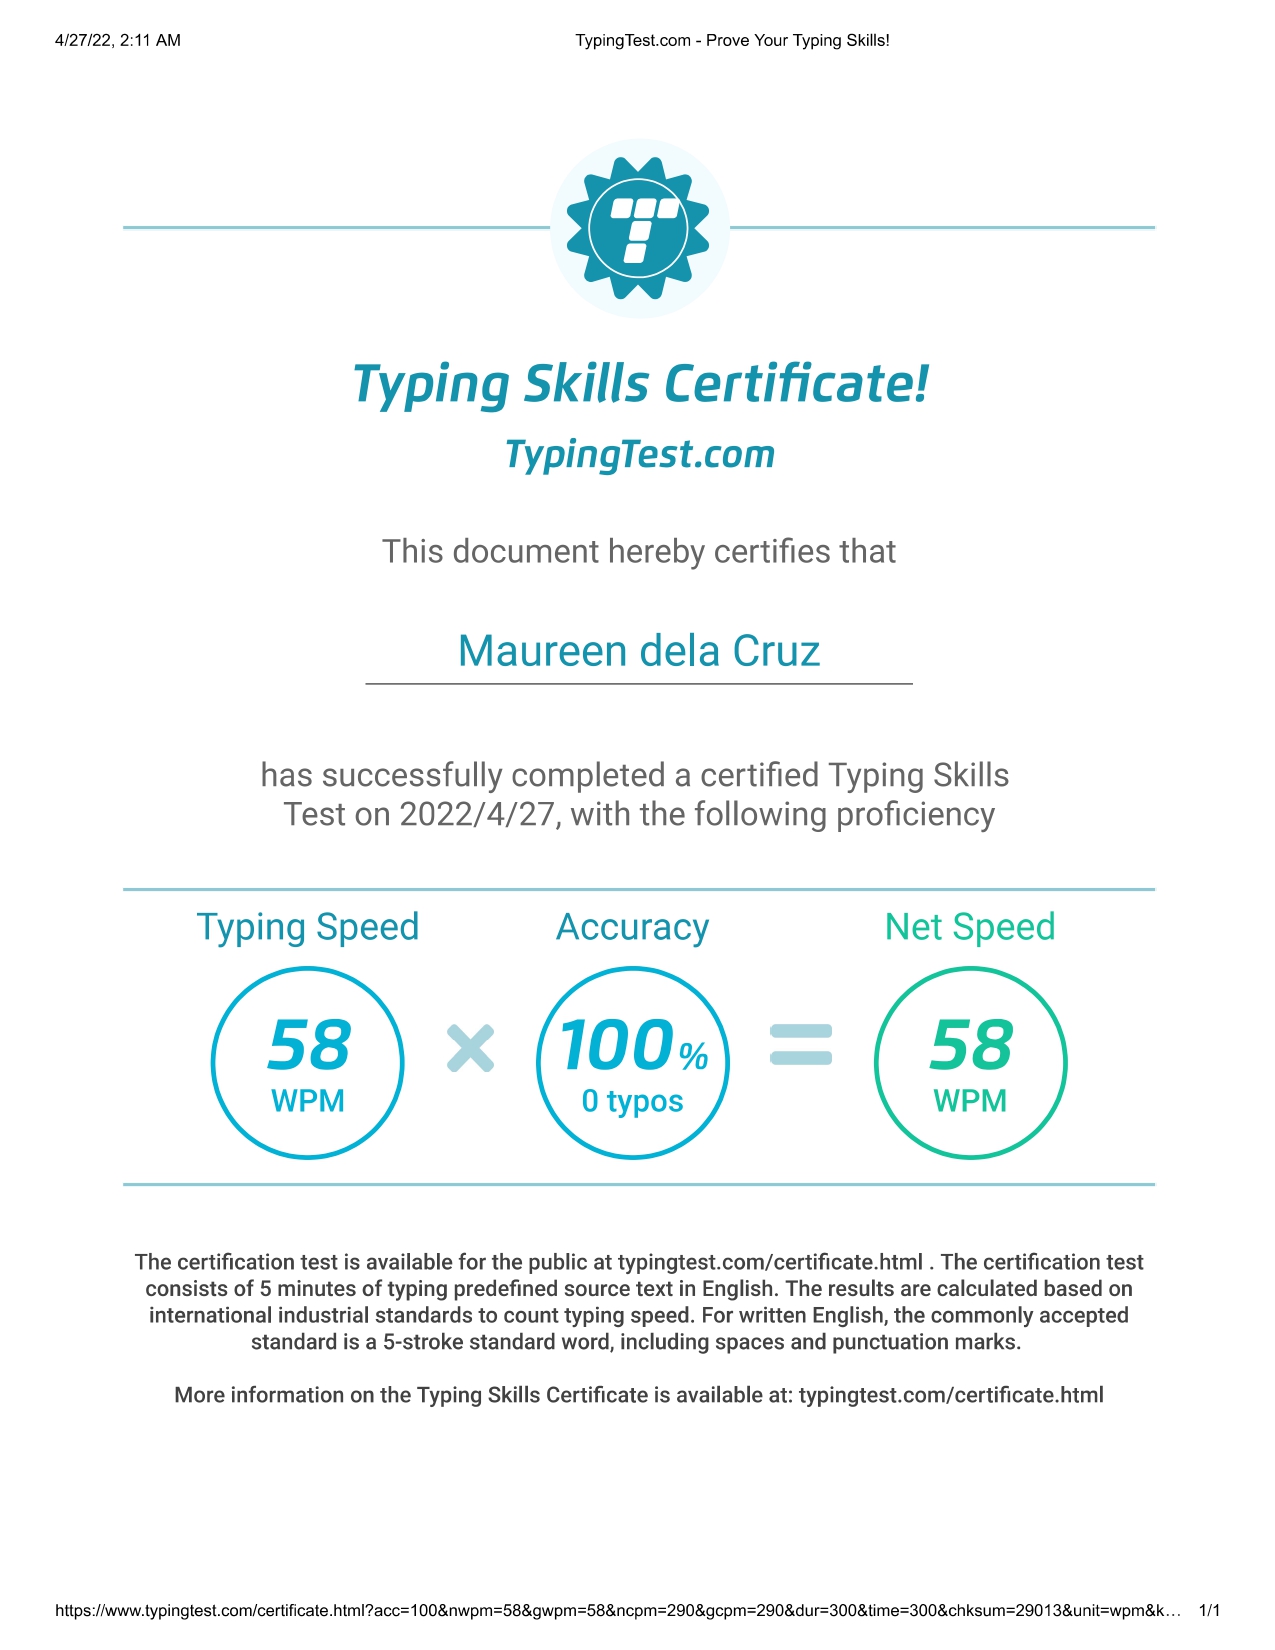 Typing skills certificate